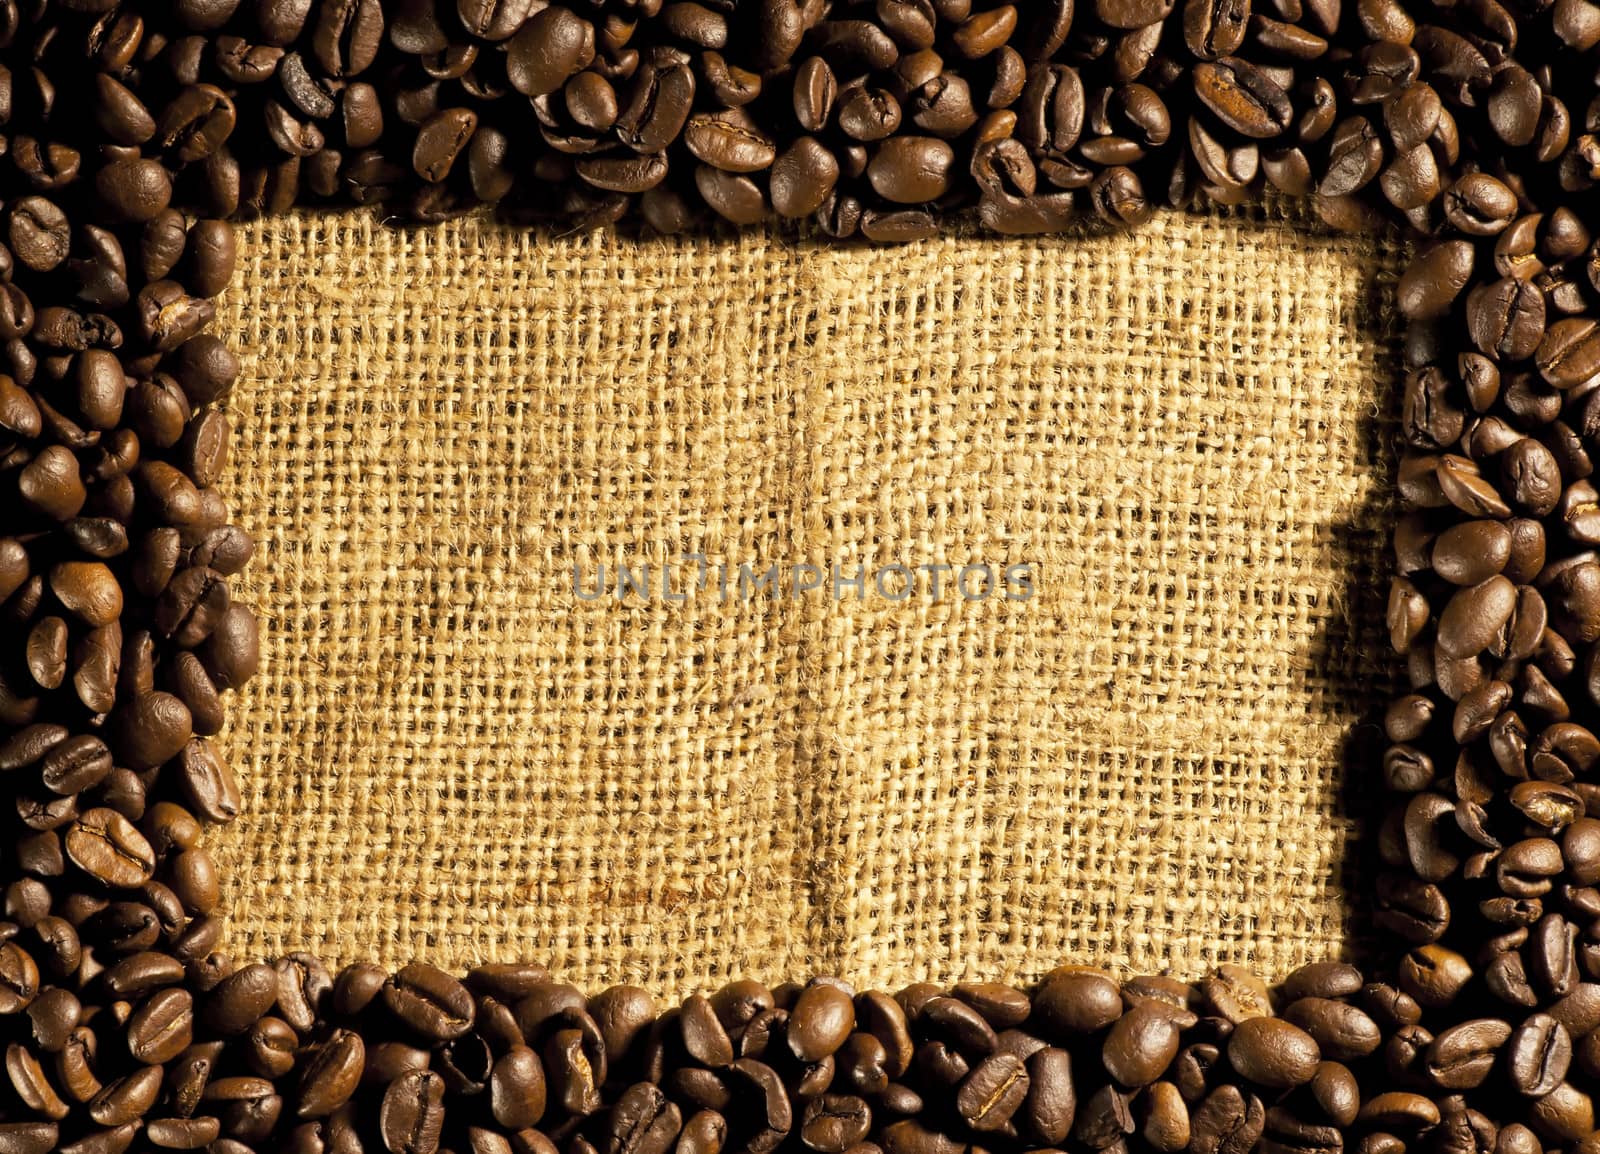 Frame of coffee beans on sacking by kosmsos111